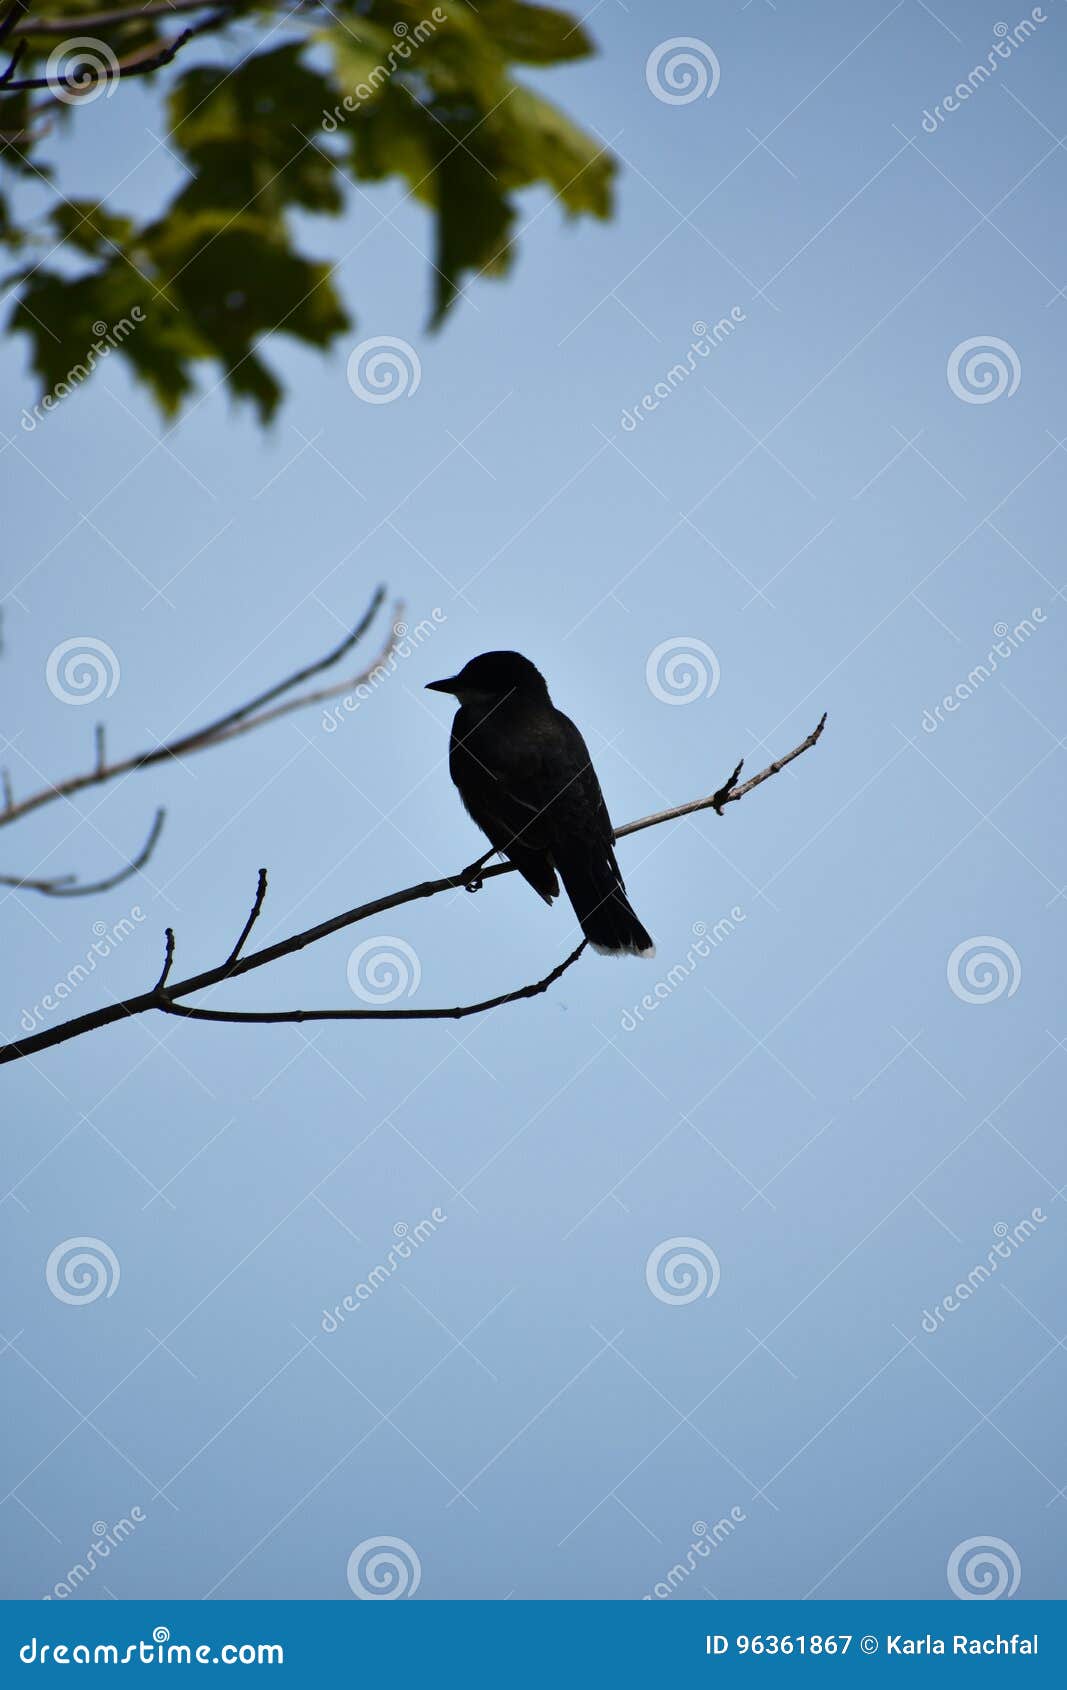 siloutte of black bird